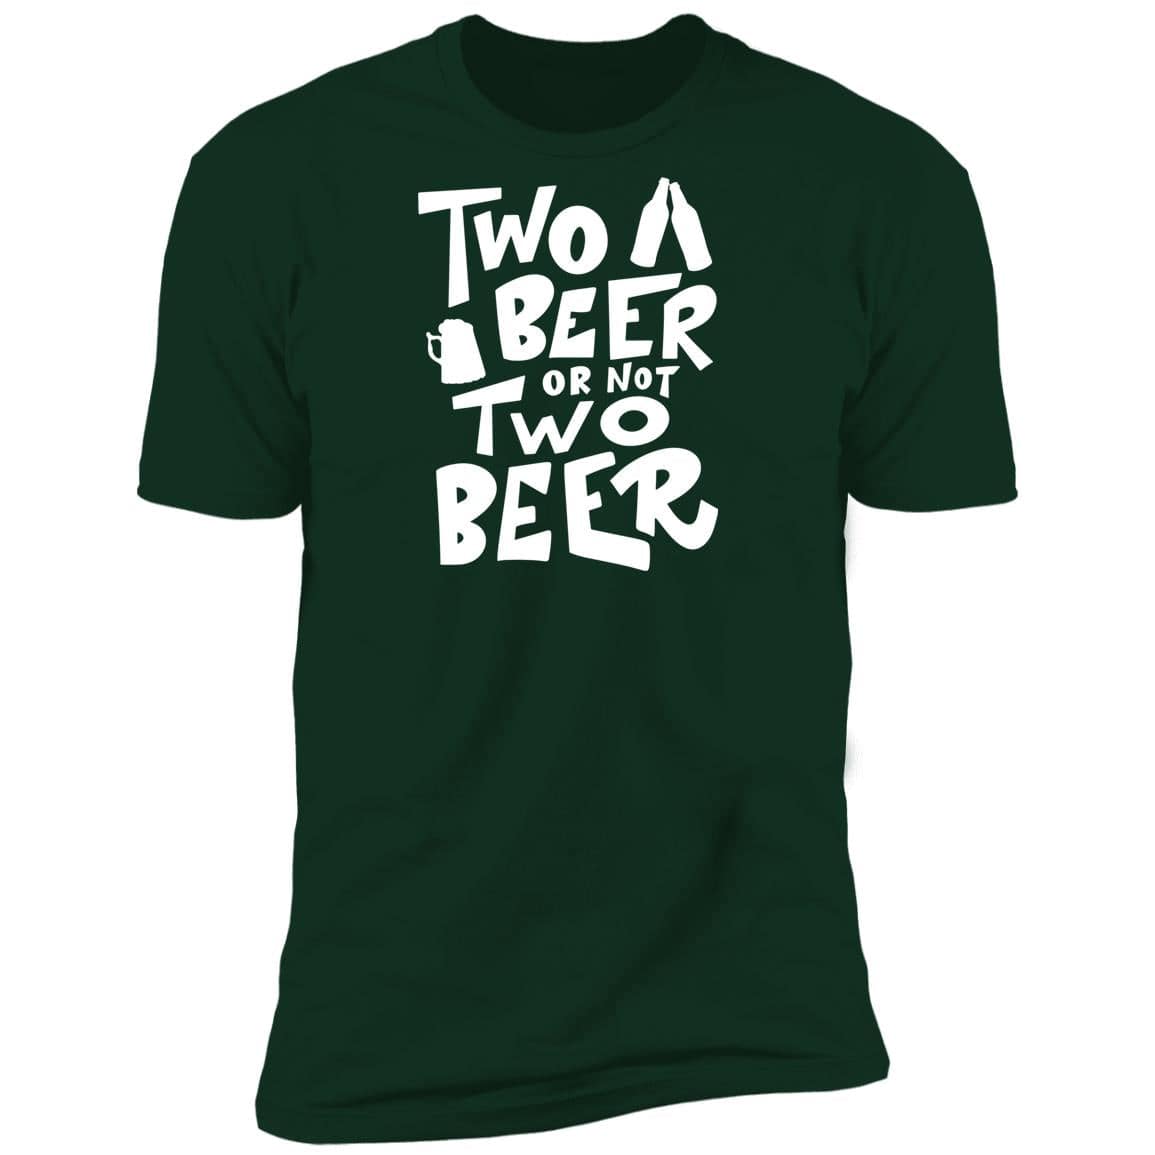 Two Beer or Not two Beer Premium Short Sleeve T-Shirt - Expressive DeZien 